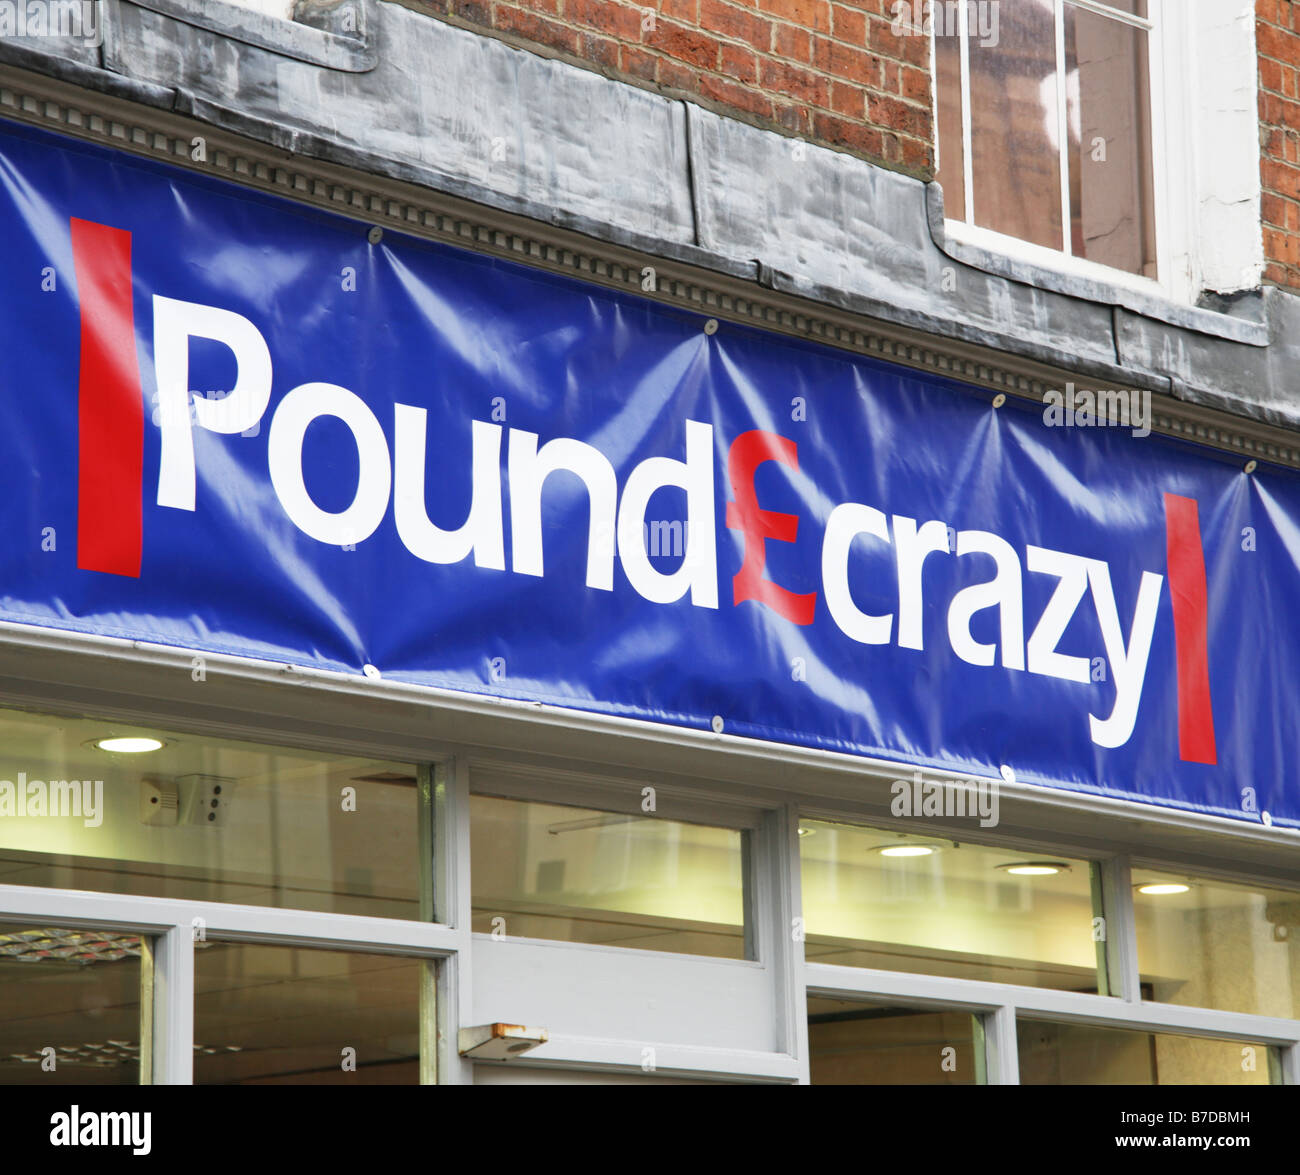 Pound Crazy Shop Stock Photo